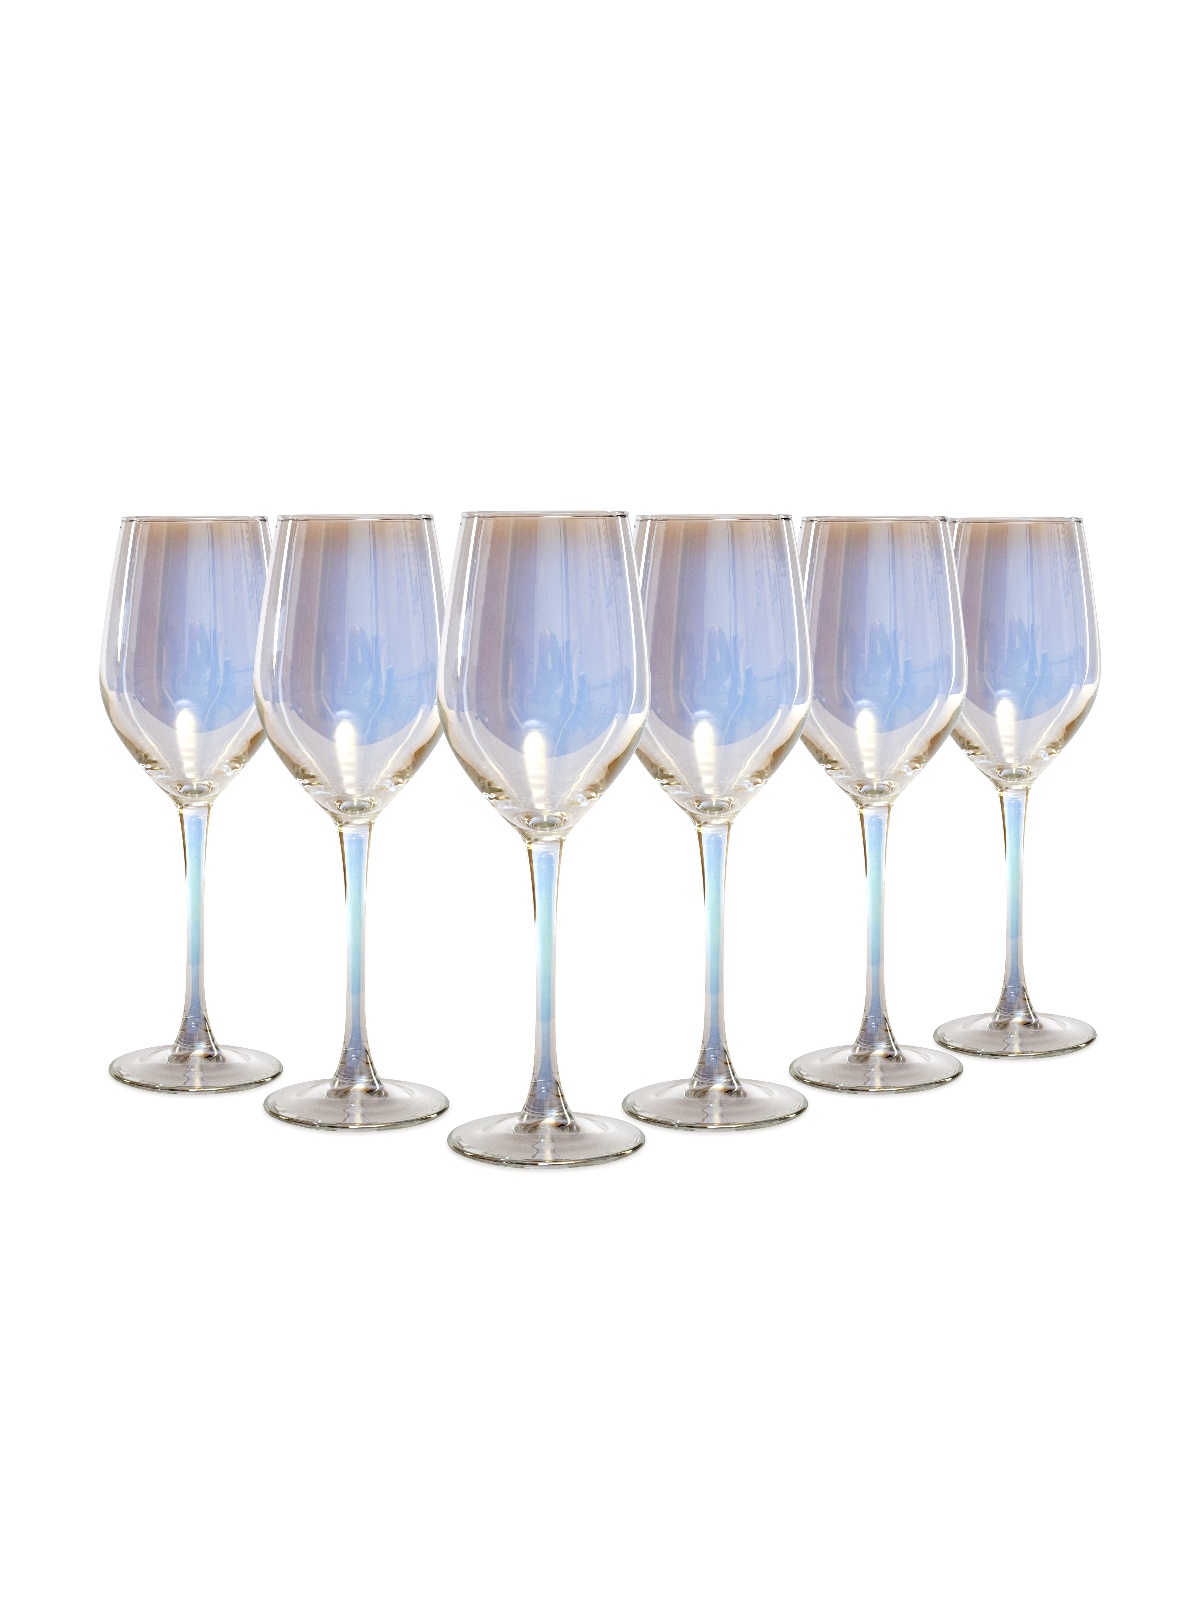 Набор бокалов для вина СЕЛЕСТ ЗОЛОТИСТЫЙ ХАМЕЛЕОН 6шт 270мл LUMINARC P1637 набор бокалов luminarc селест золотистый хамелеон 6шт 160мл шампанское стекло